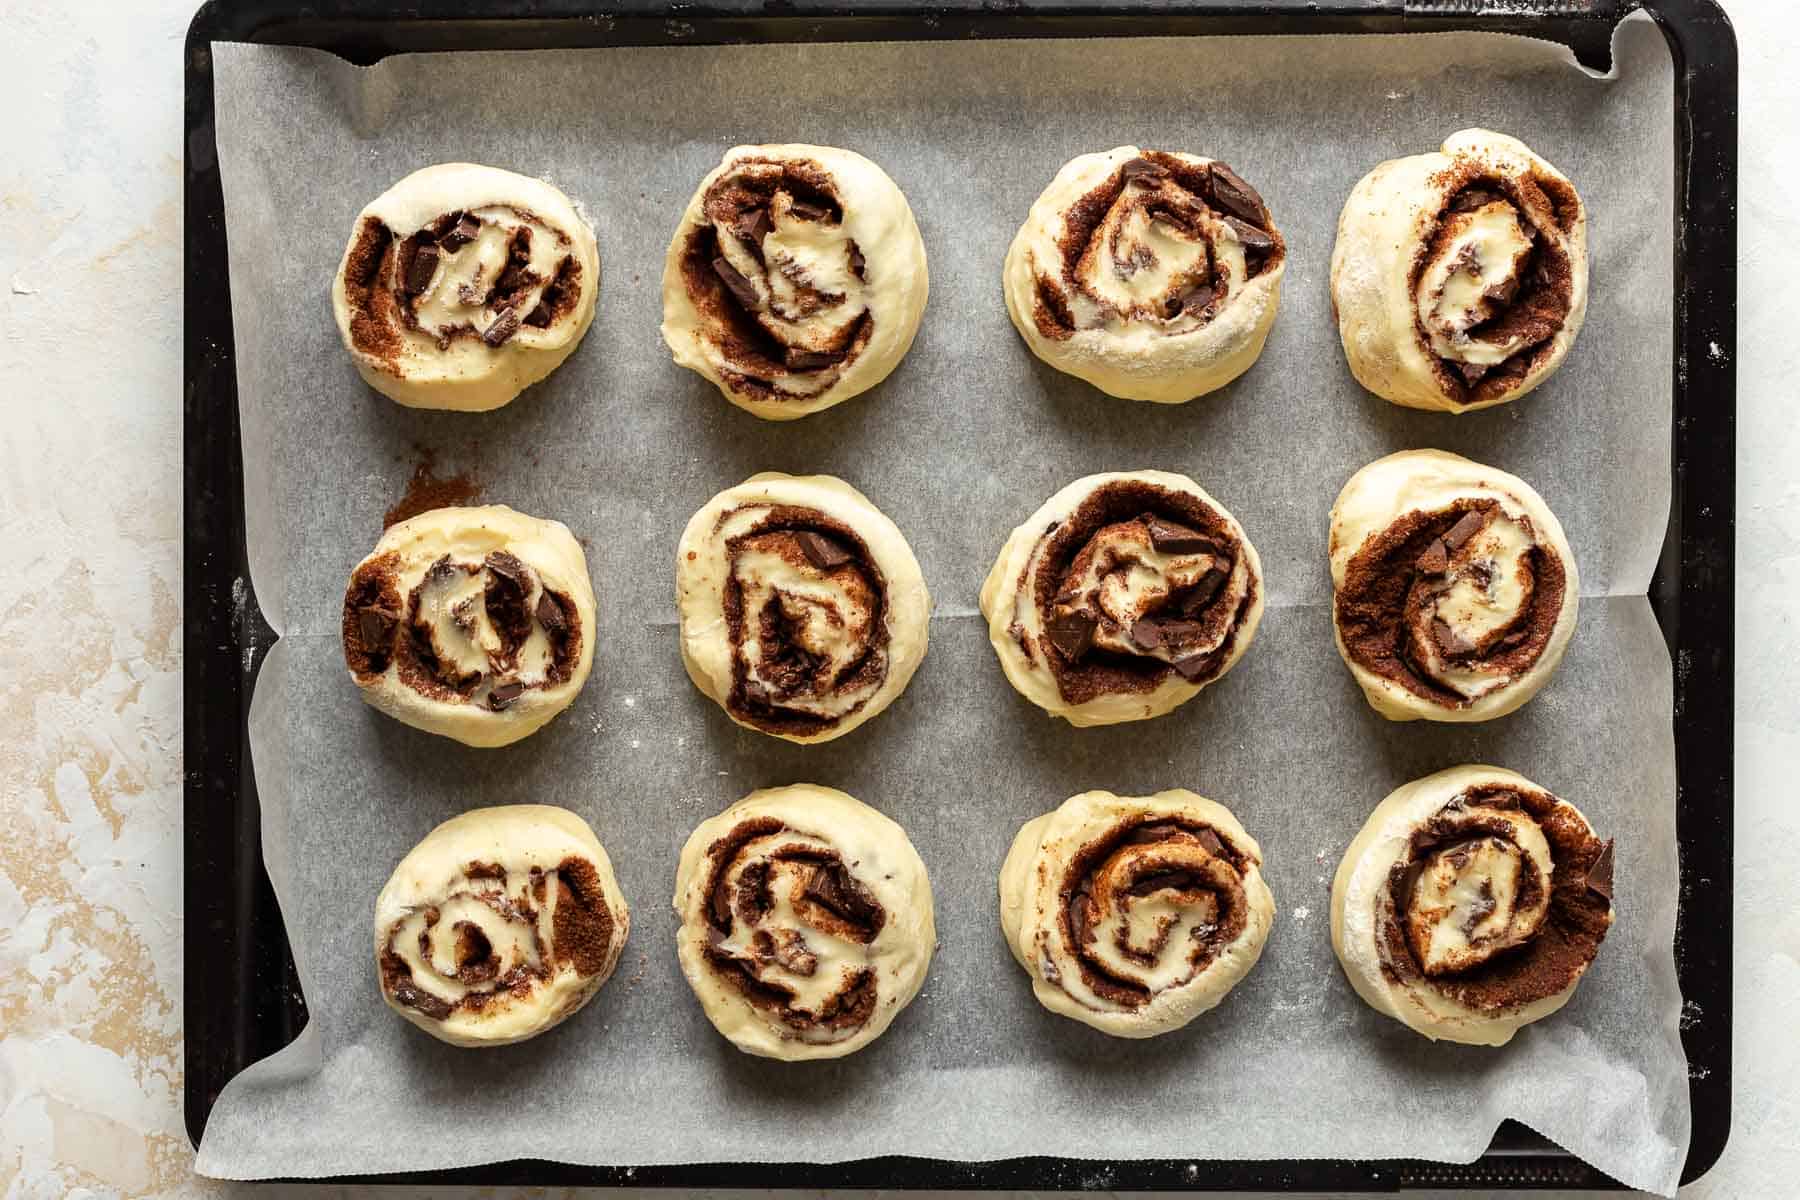 chocolate rolls dough rising in pan before baking